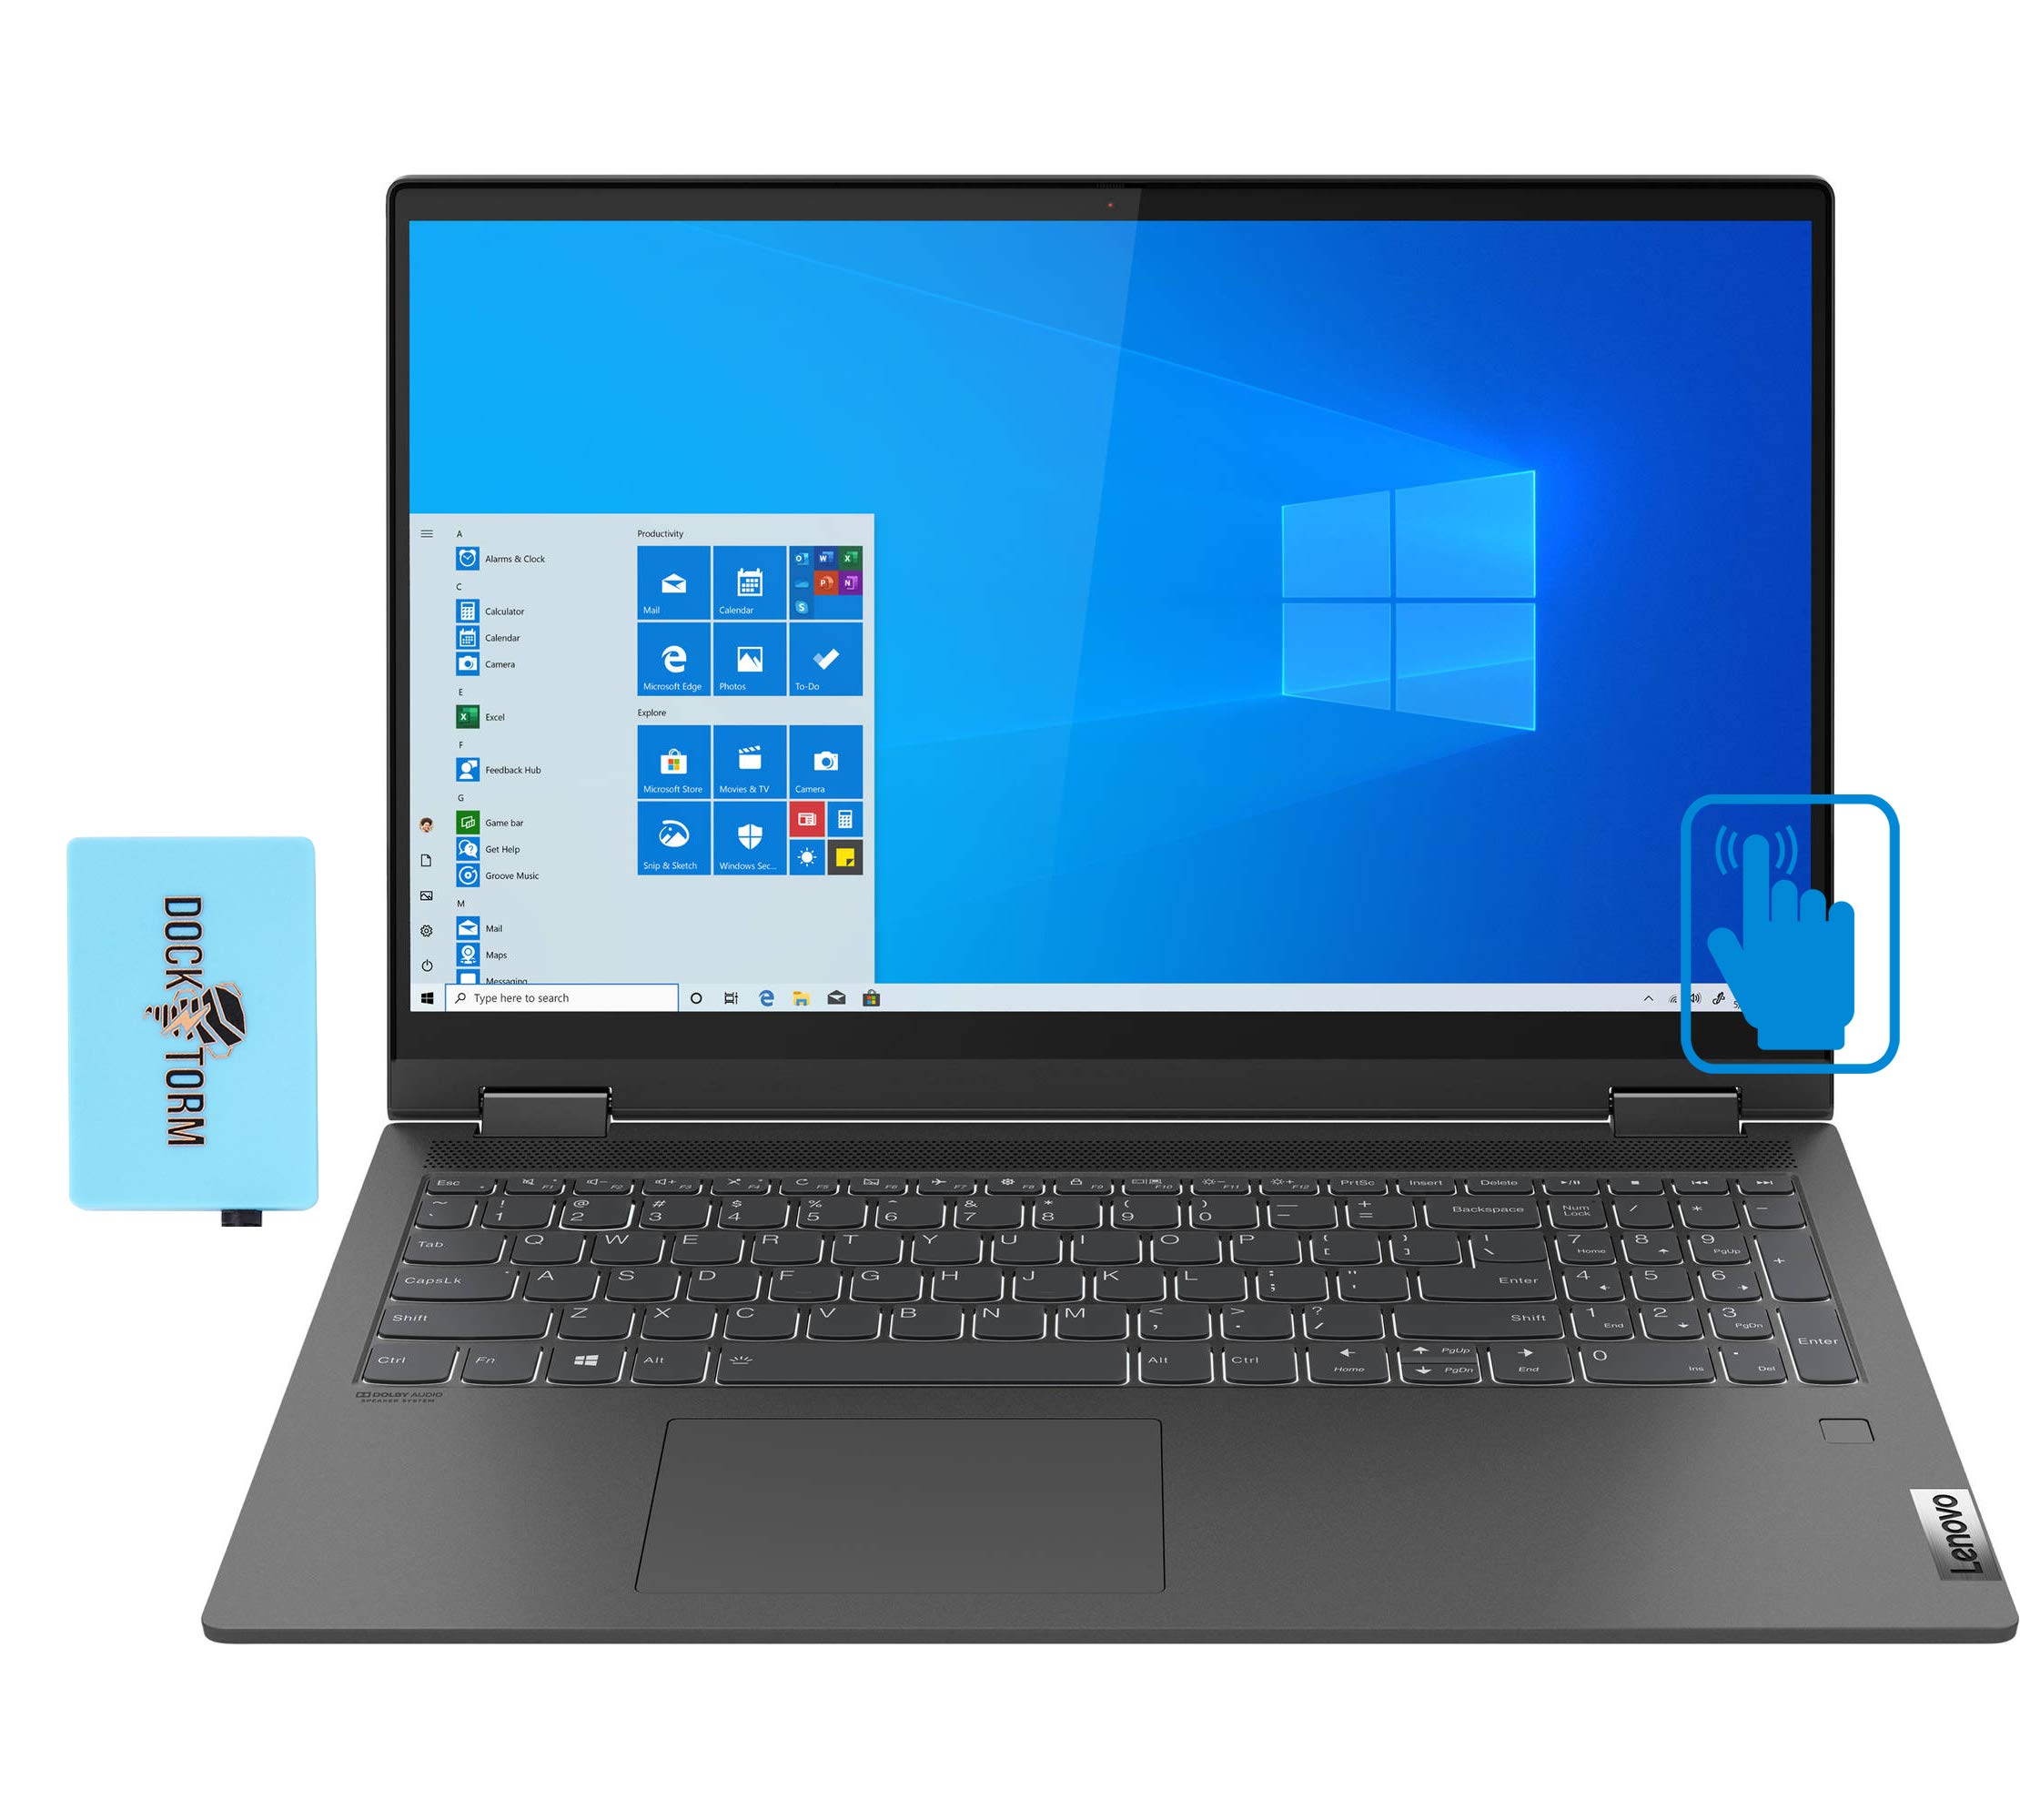 Lenovo IdeaPad Flex 5 15IIL05 Home and Business Laptop (Intel i7-1065G7 4-Core, 16GB RAM, 512GB PCIe SSD, Intel Iris Plus, 15.6" Touch Full HD ...